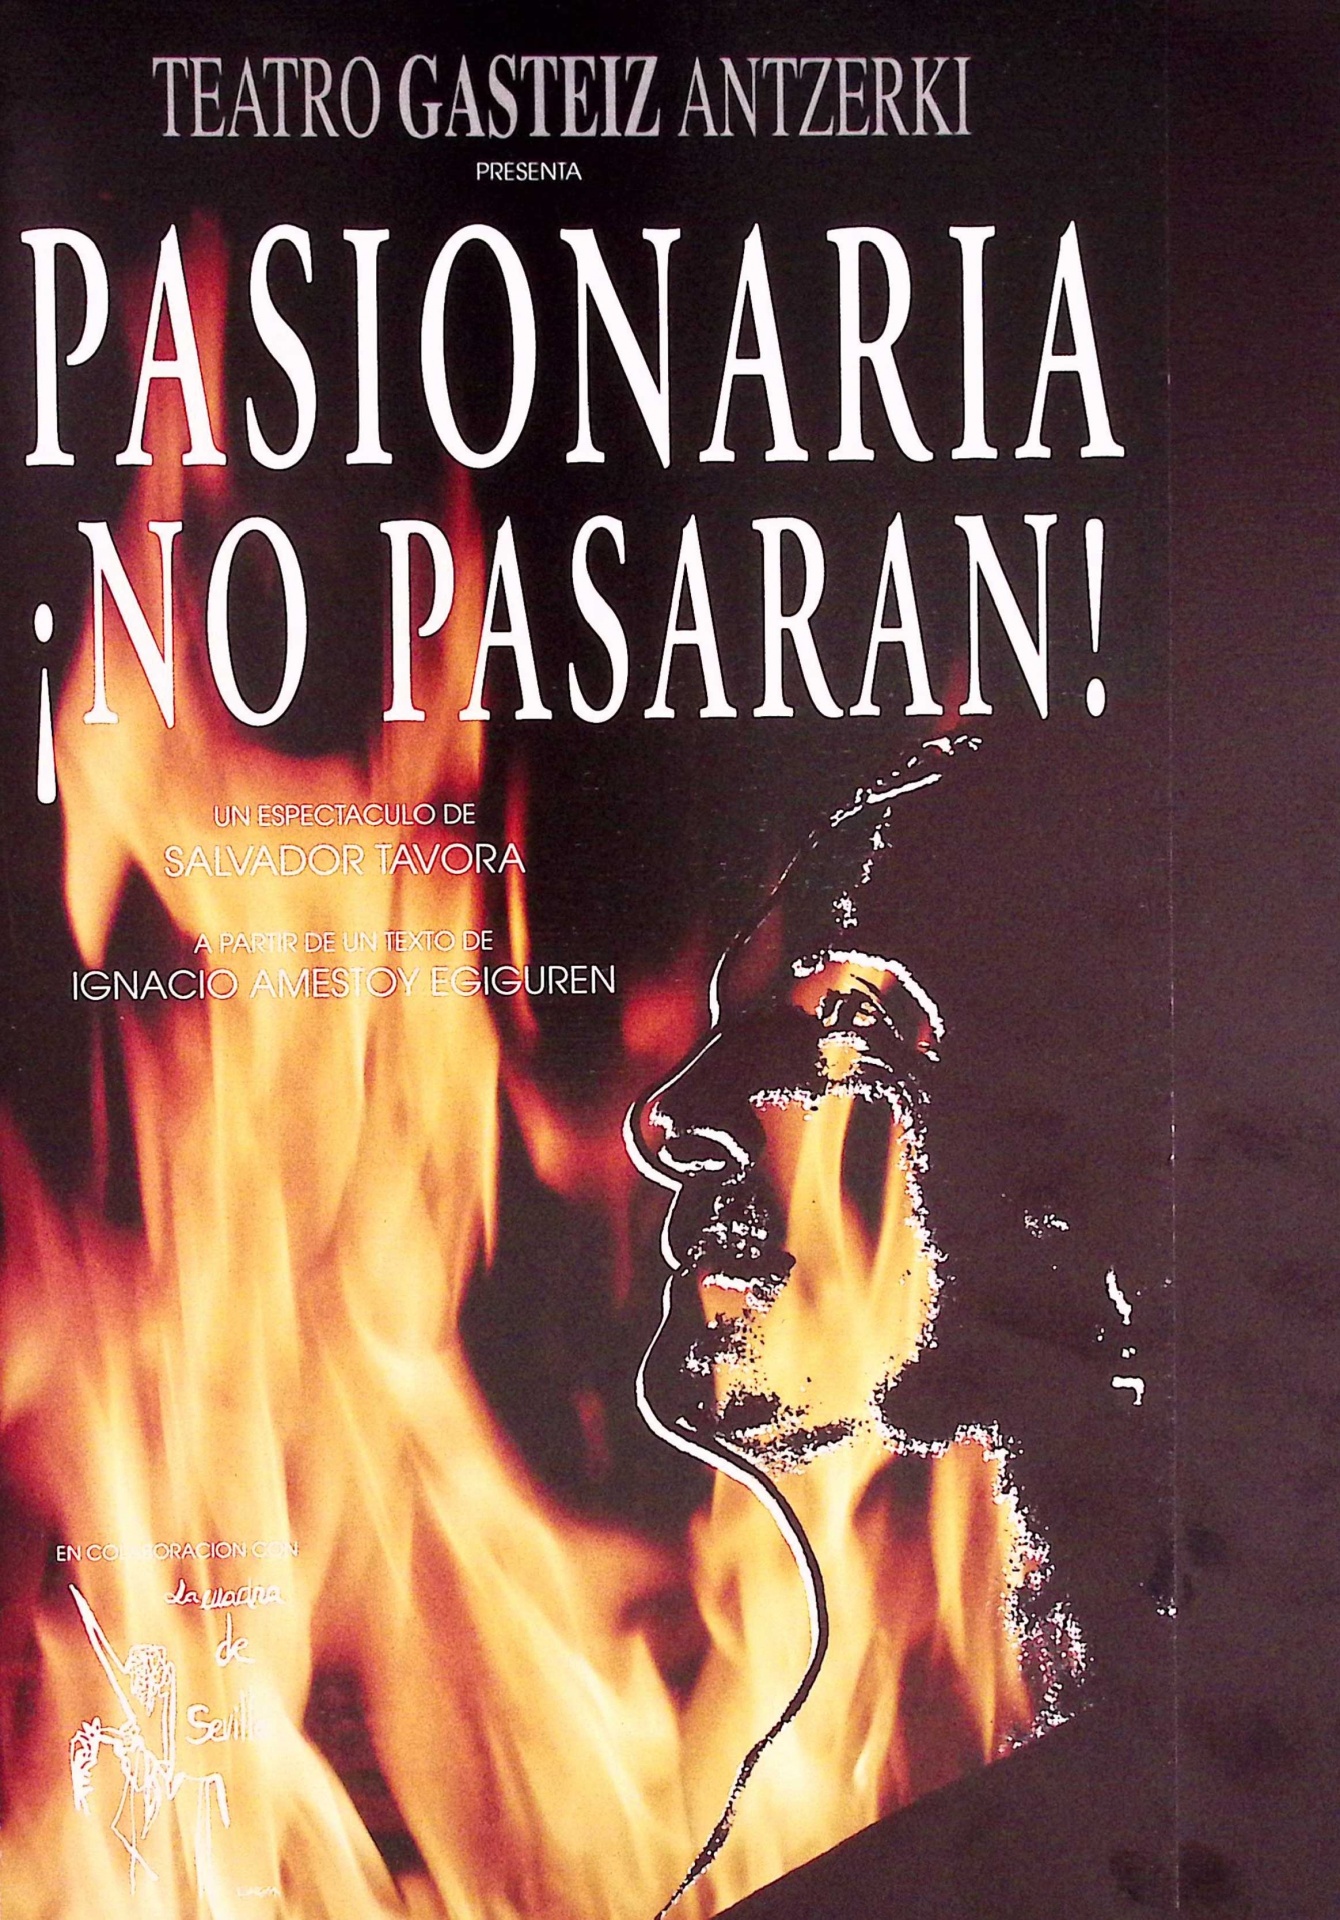 Teatro Gasteiz Antzerki presenta Pasionaria ¡no pasarán!. Un espectáculo de Salvador Távora a partir de textos de Ignacio Amestoy Egiguren